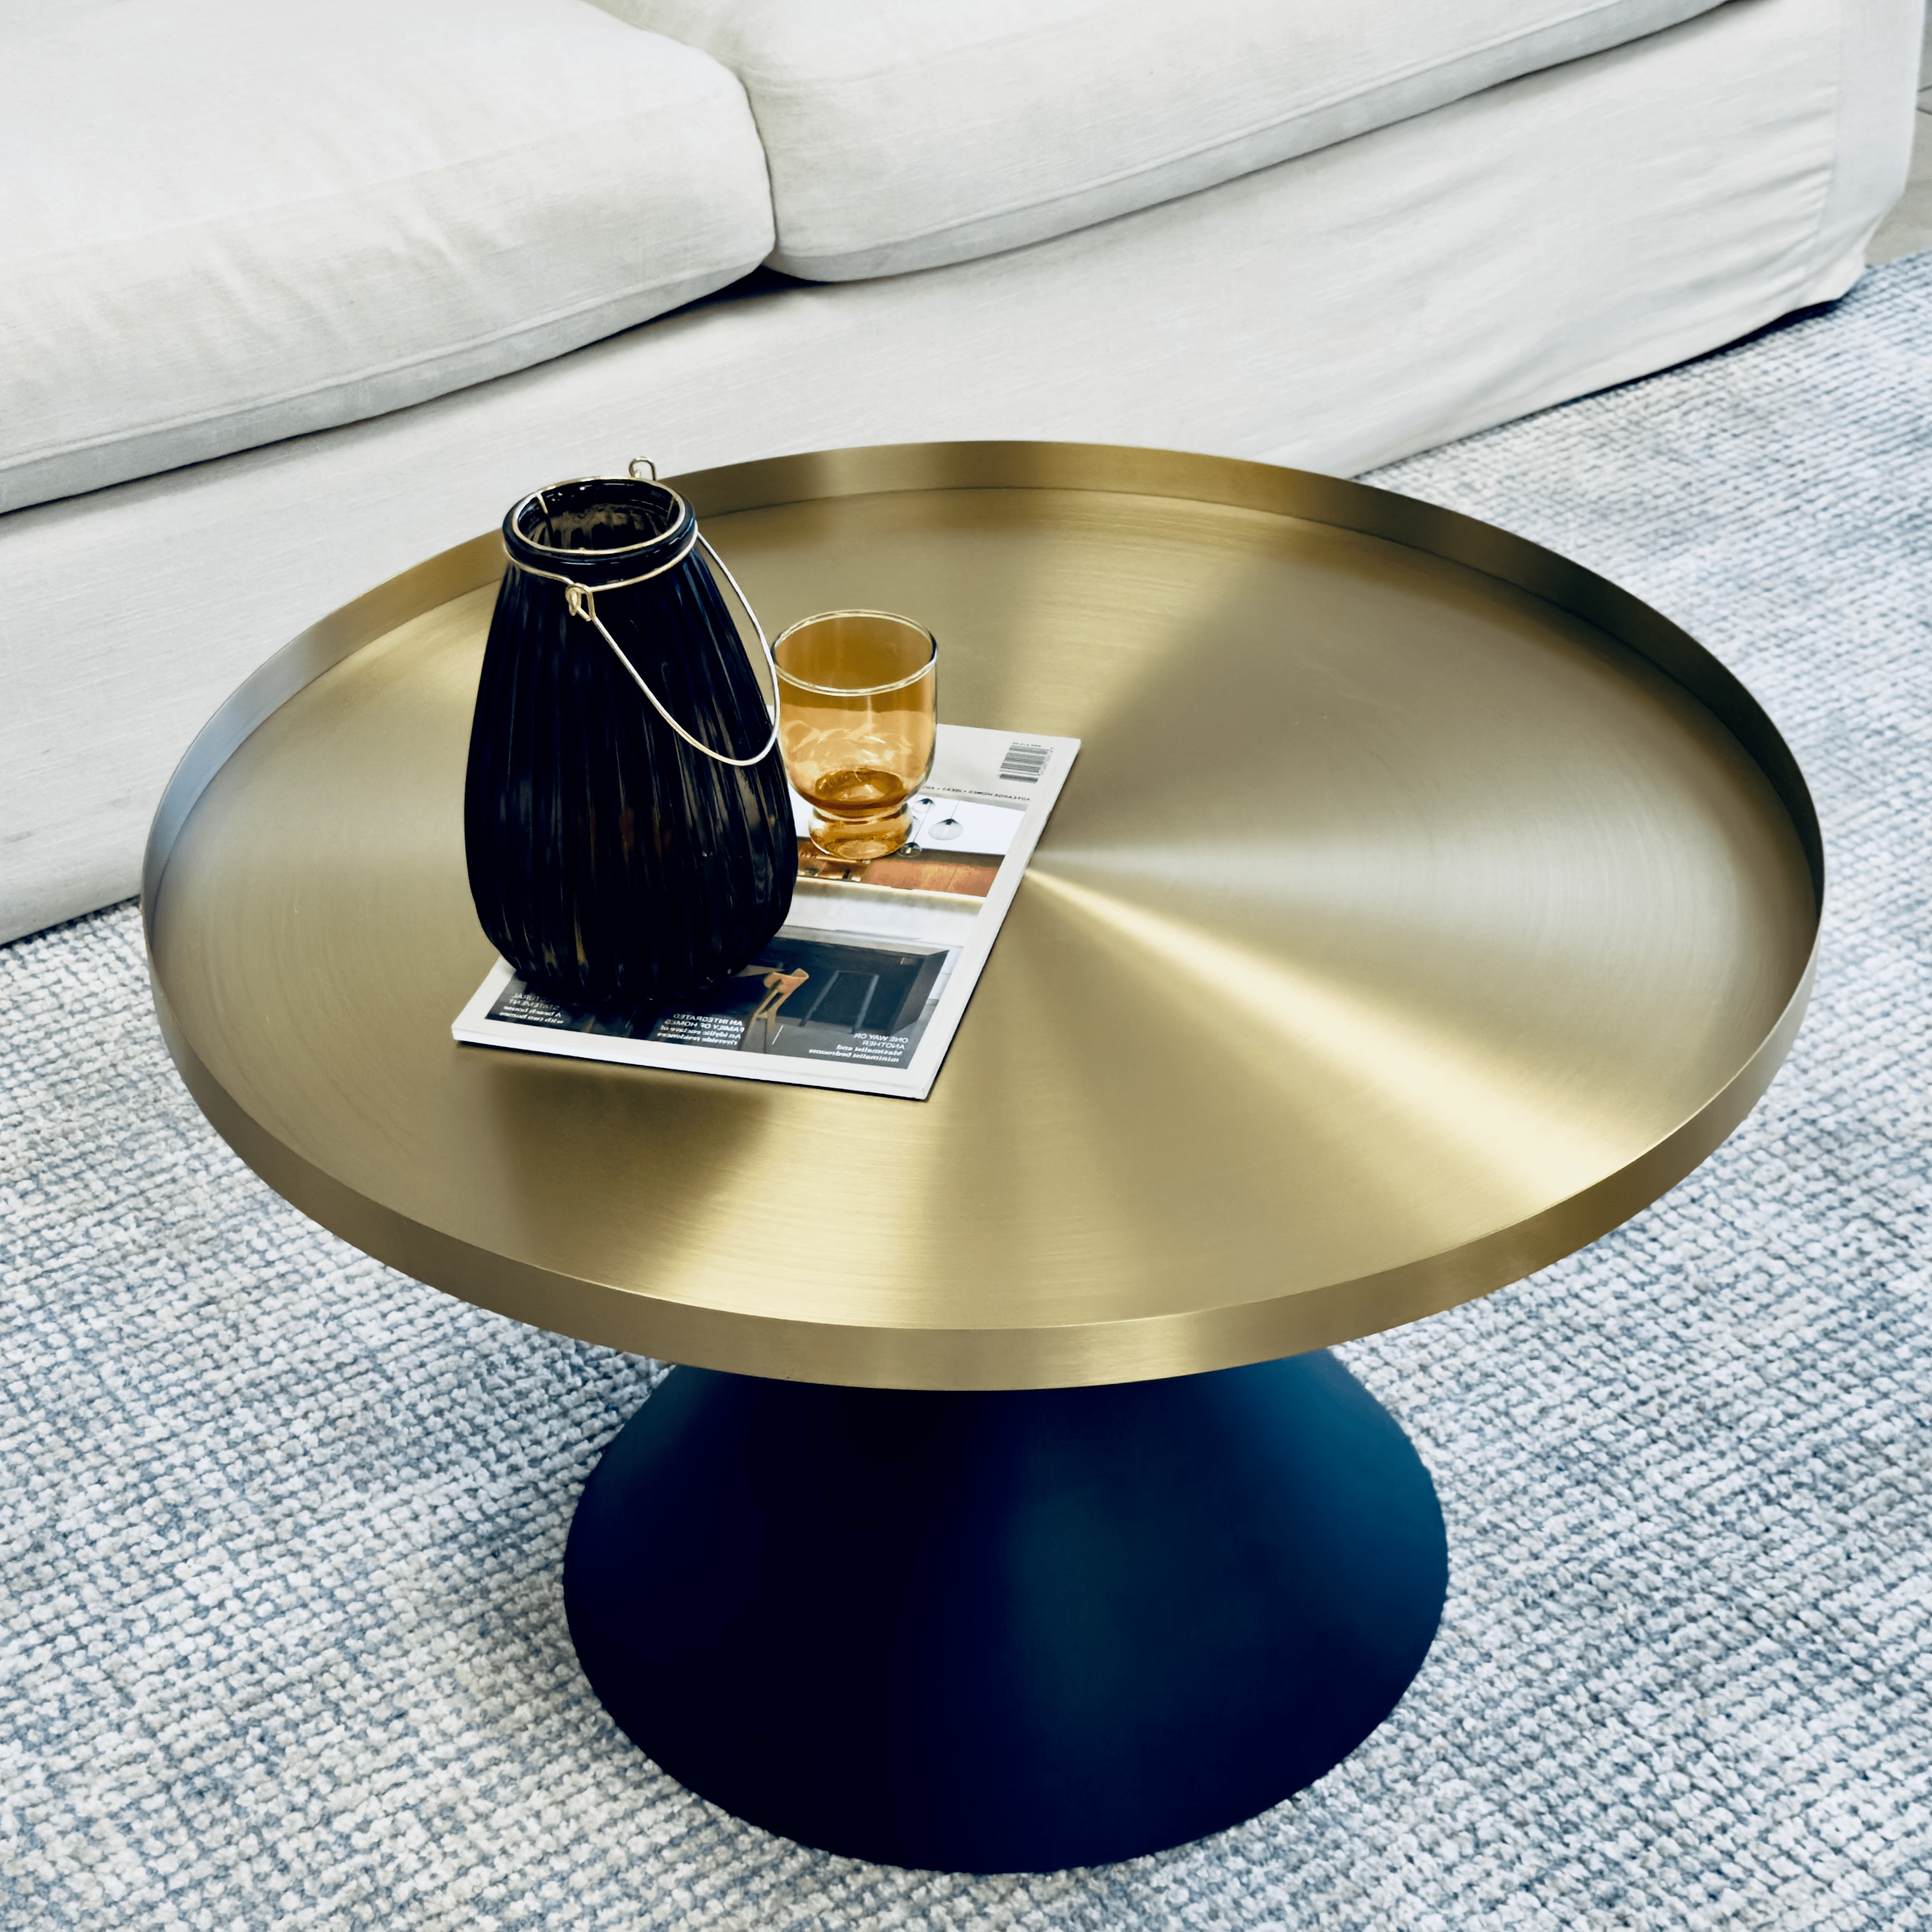 Seek & Ramble Coffee Tables Lloyd Round 76cm Coffee Table Metal Brushed Gold & Black Cone Base